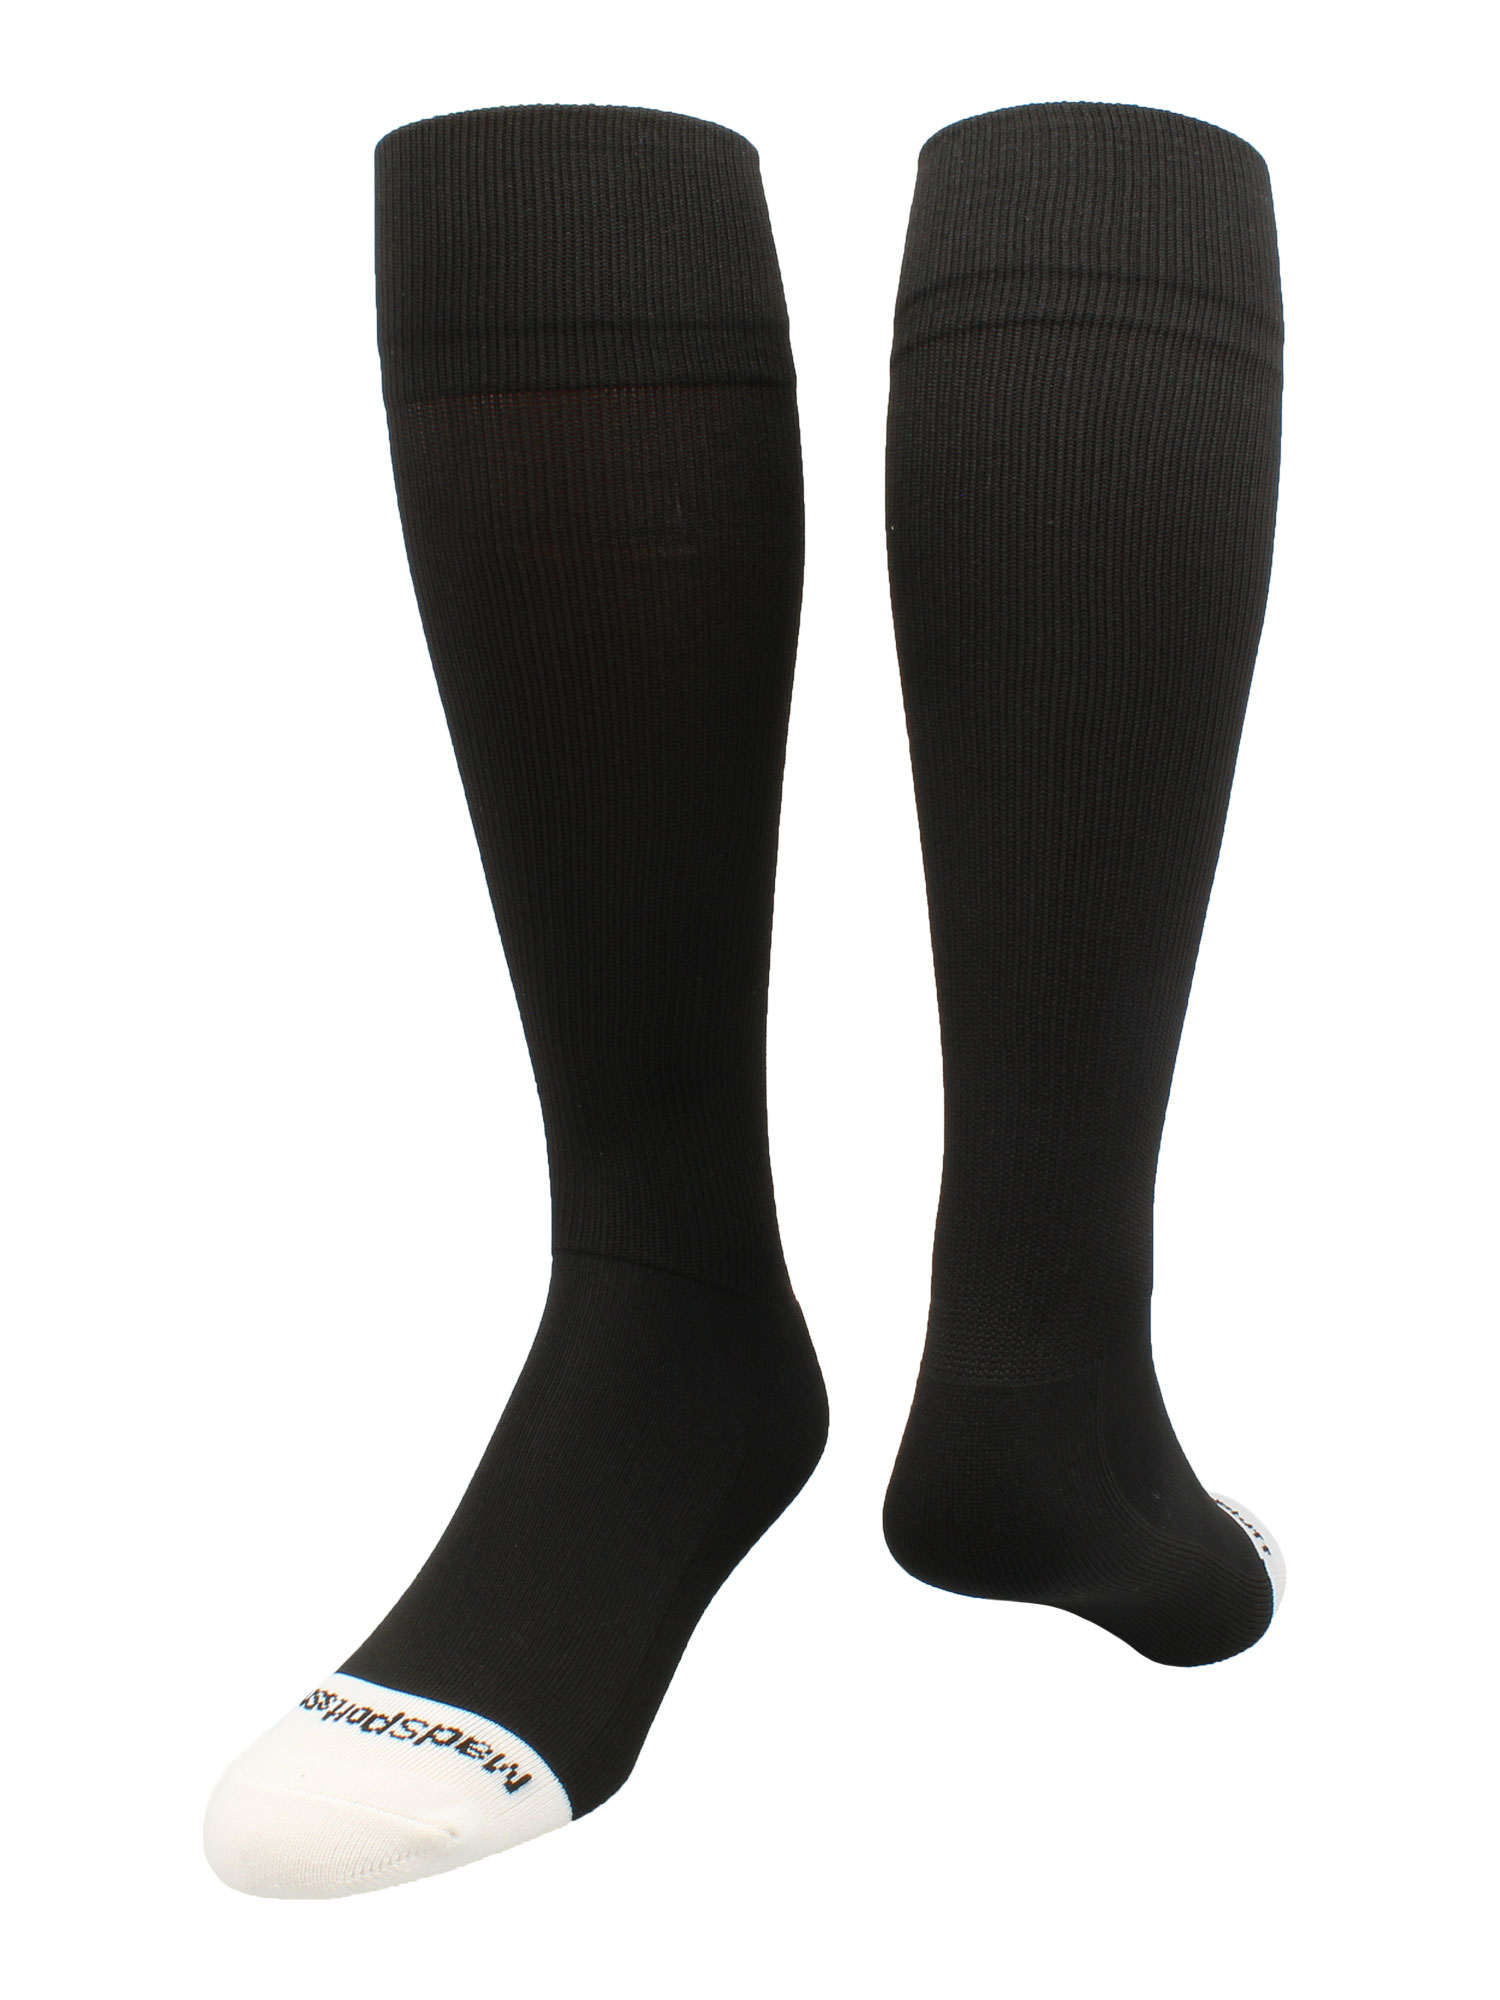 MadSportsStuff - Pro Line Over the Calf Softball Socks (Black, Medium ...